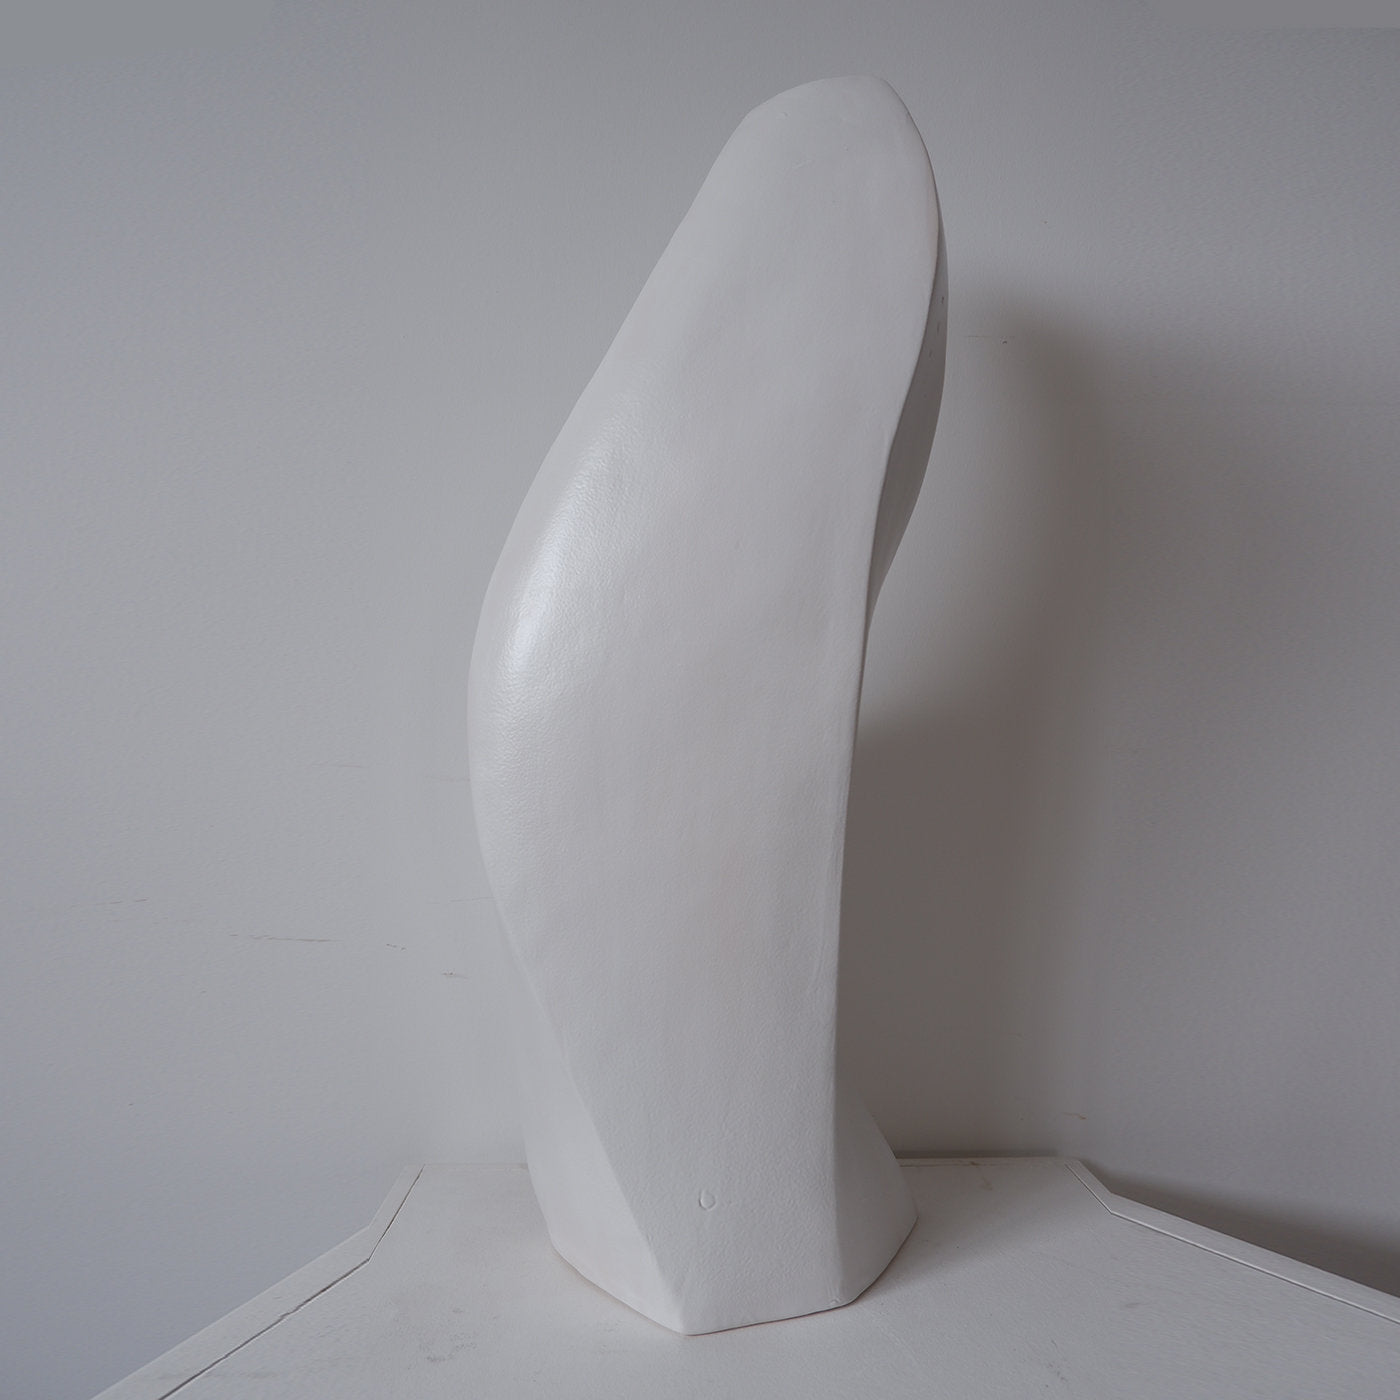 White Demeter Vase #3 - Alternative view 1